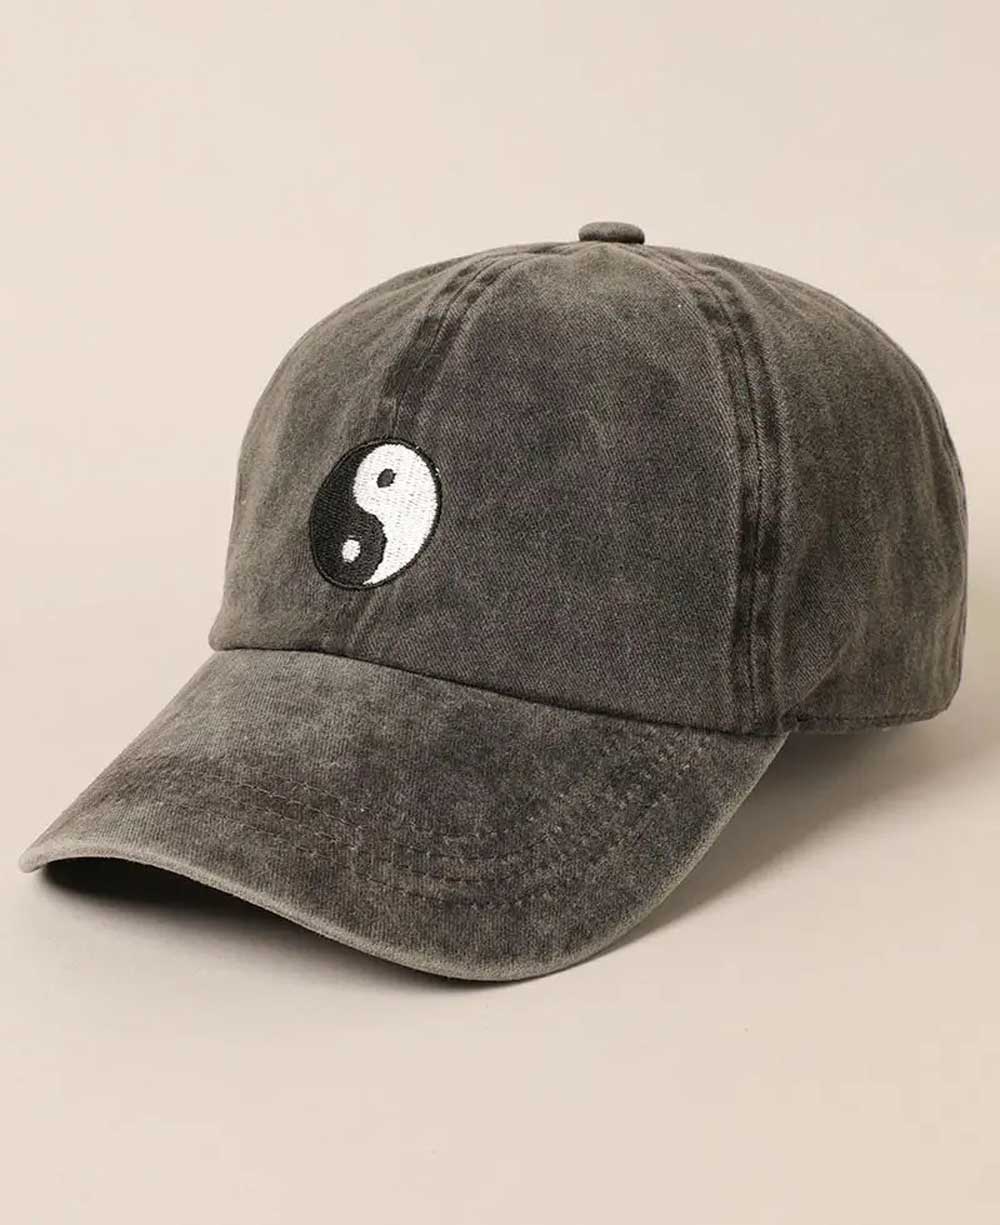 Yin Yang Embroidered Baseball Cap - Cap